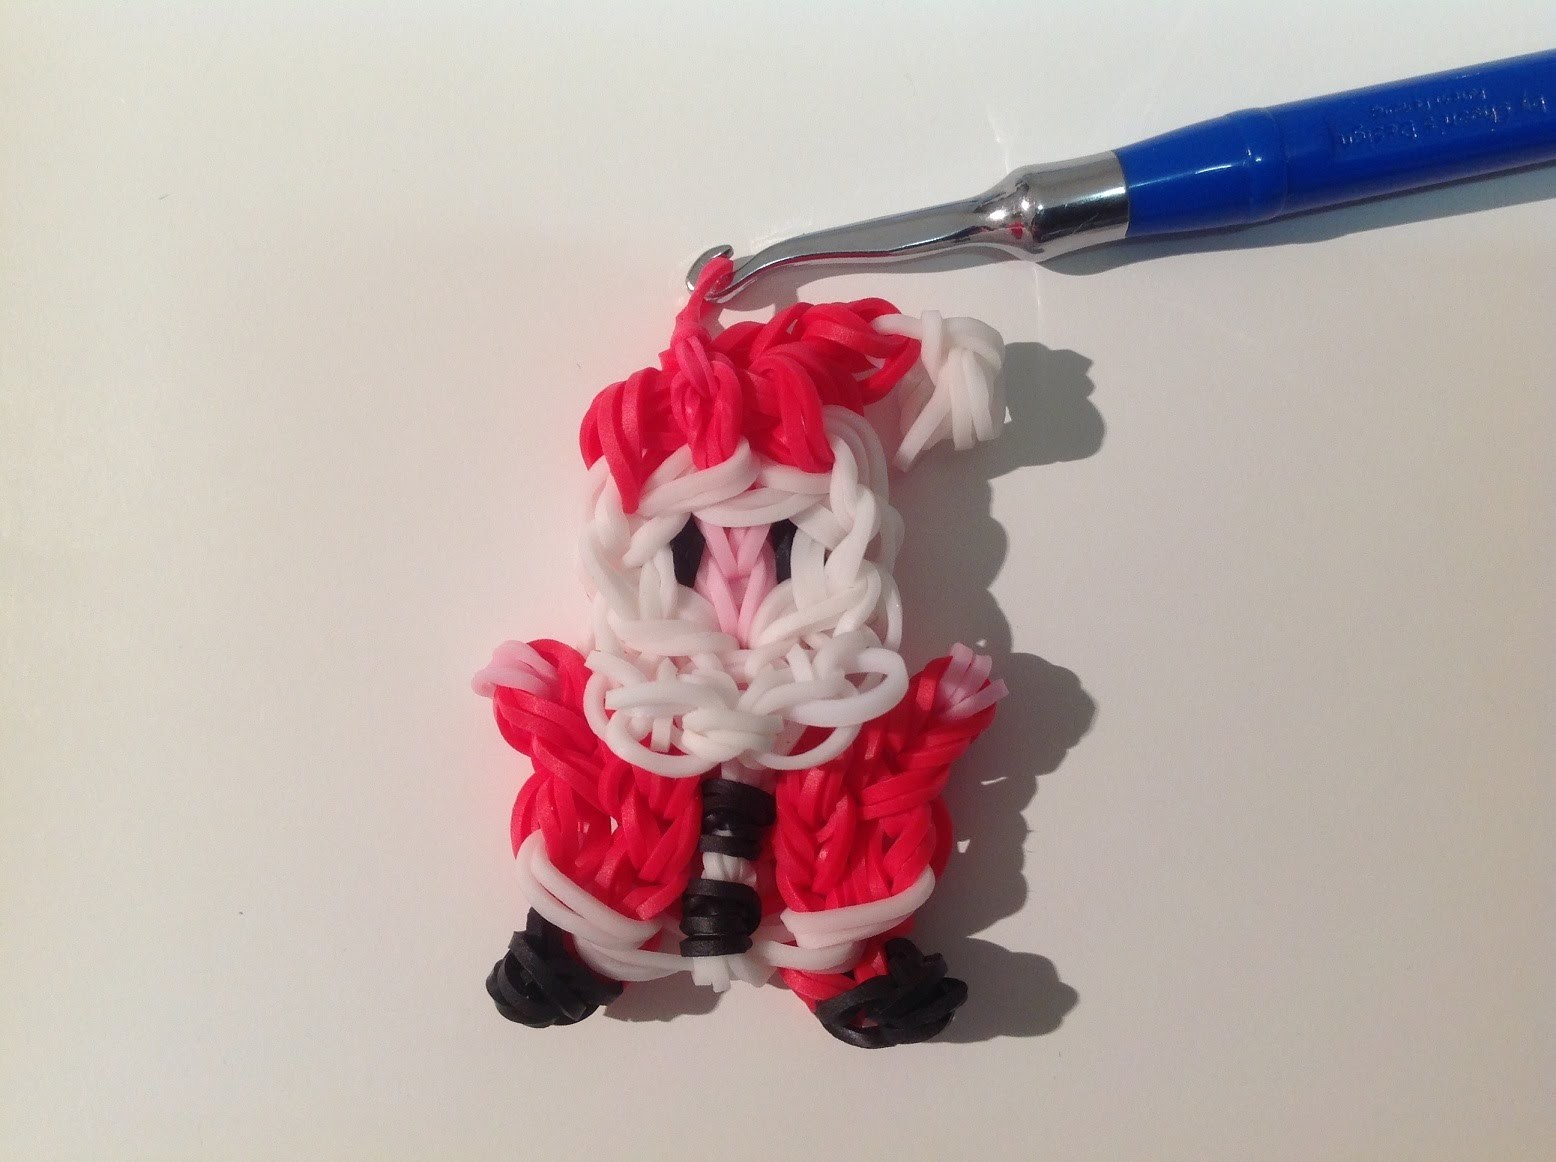 Rainbow Loom Nederlands, Mini Kerstman, Mini Santa, Original Design